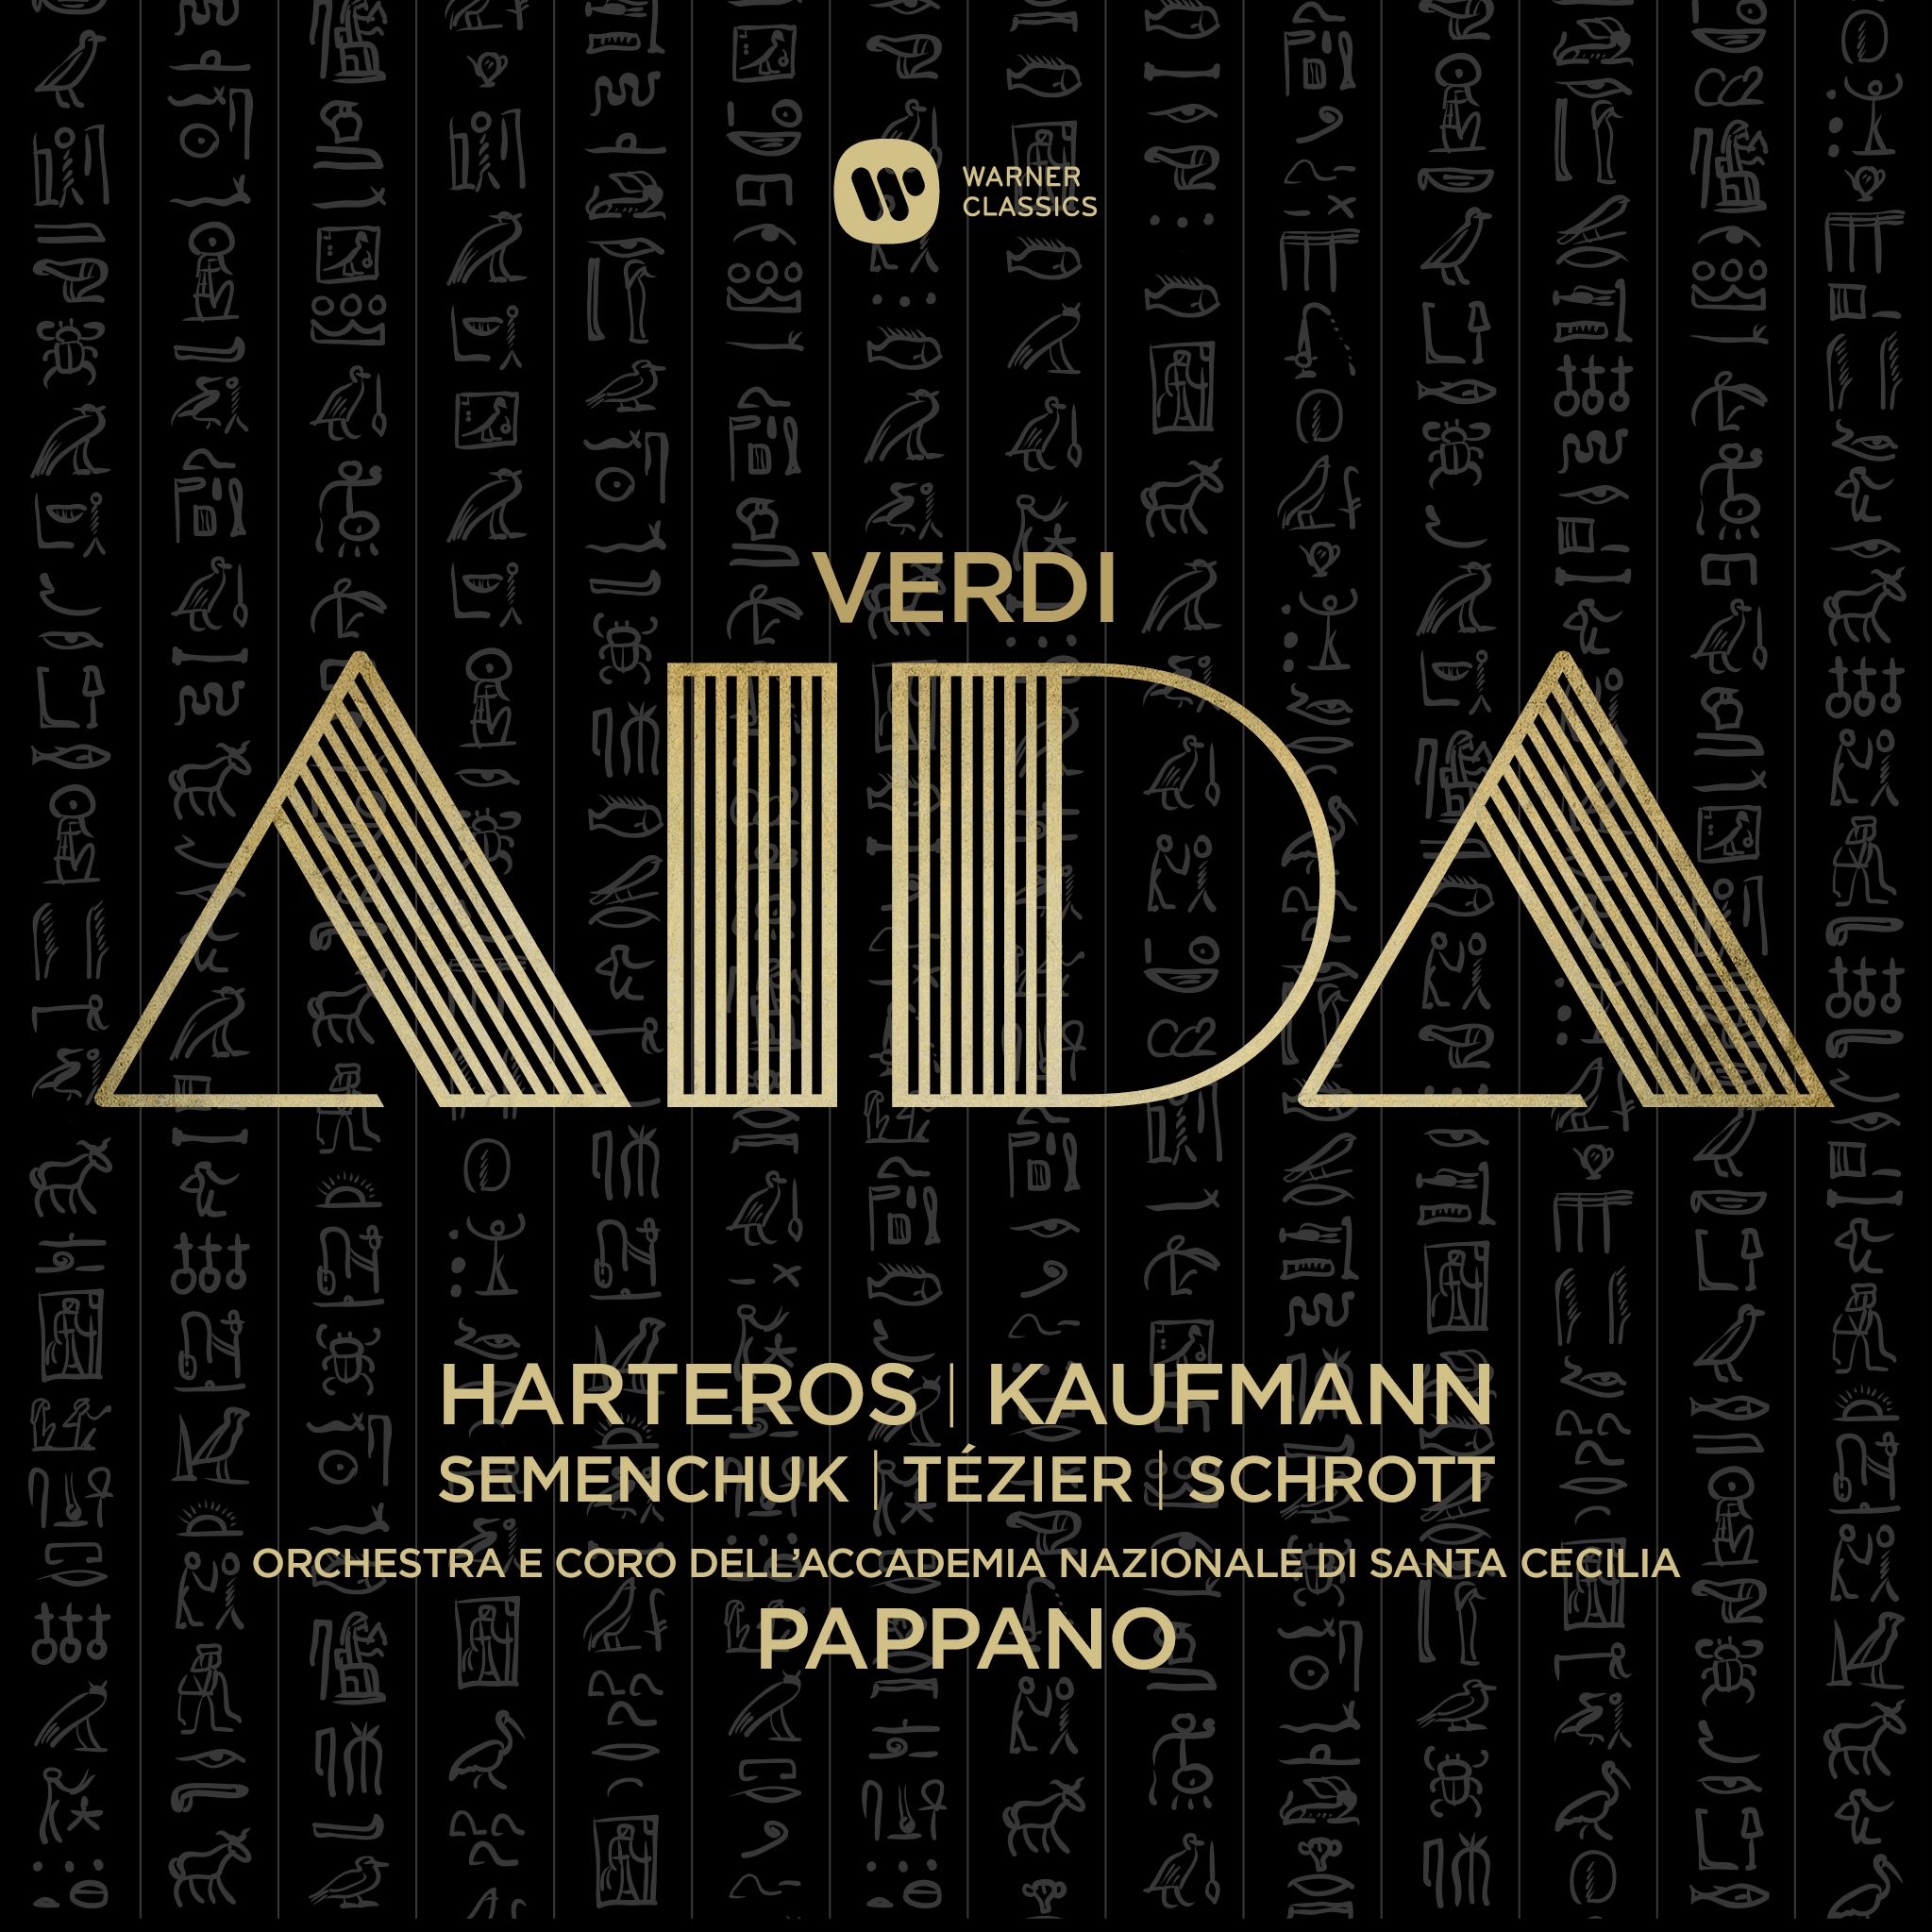 A da, Act 3: " Pur ti riveggo, mia dolce Aida" Radame s, Aida